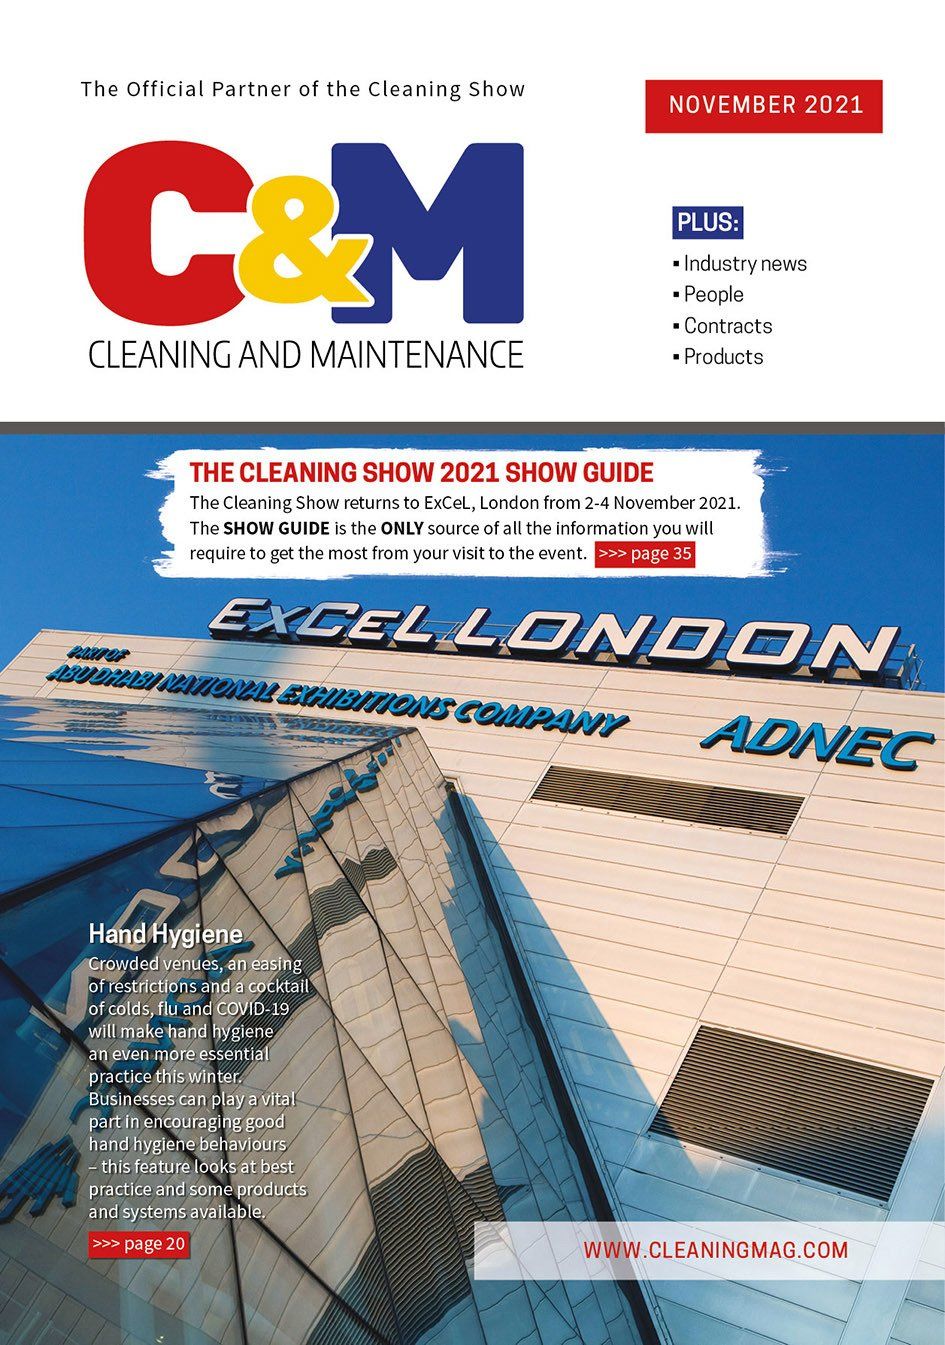 C&M (Cleaning & Maintenance)